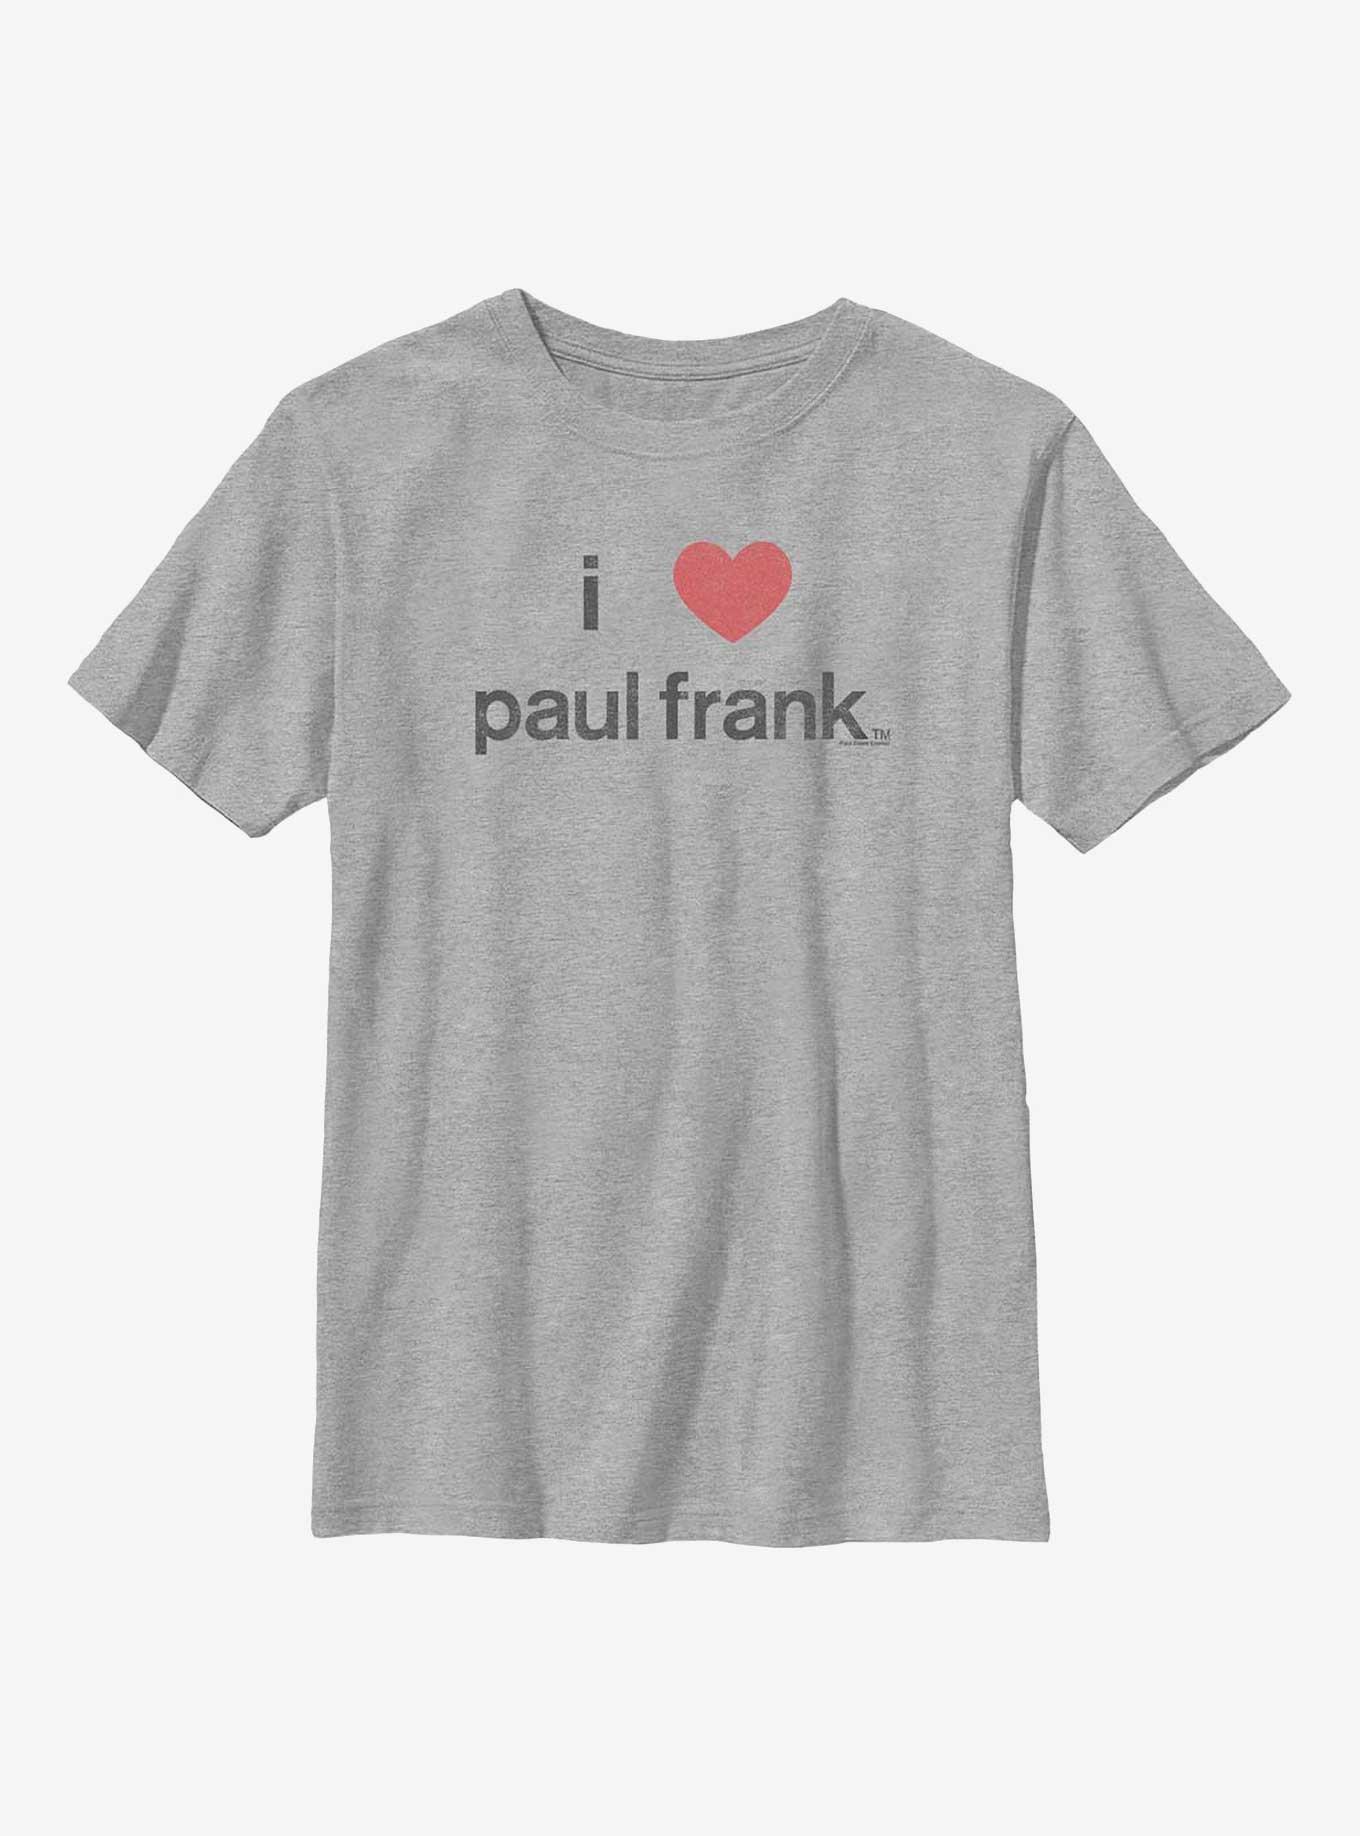 Paul Frank I Heart Paul Frank Youth T-Shirt, ATH HTR, hi-res